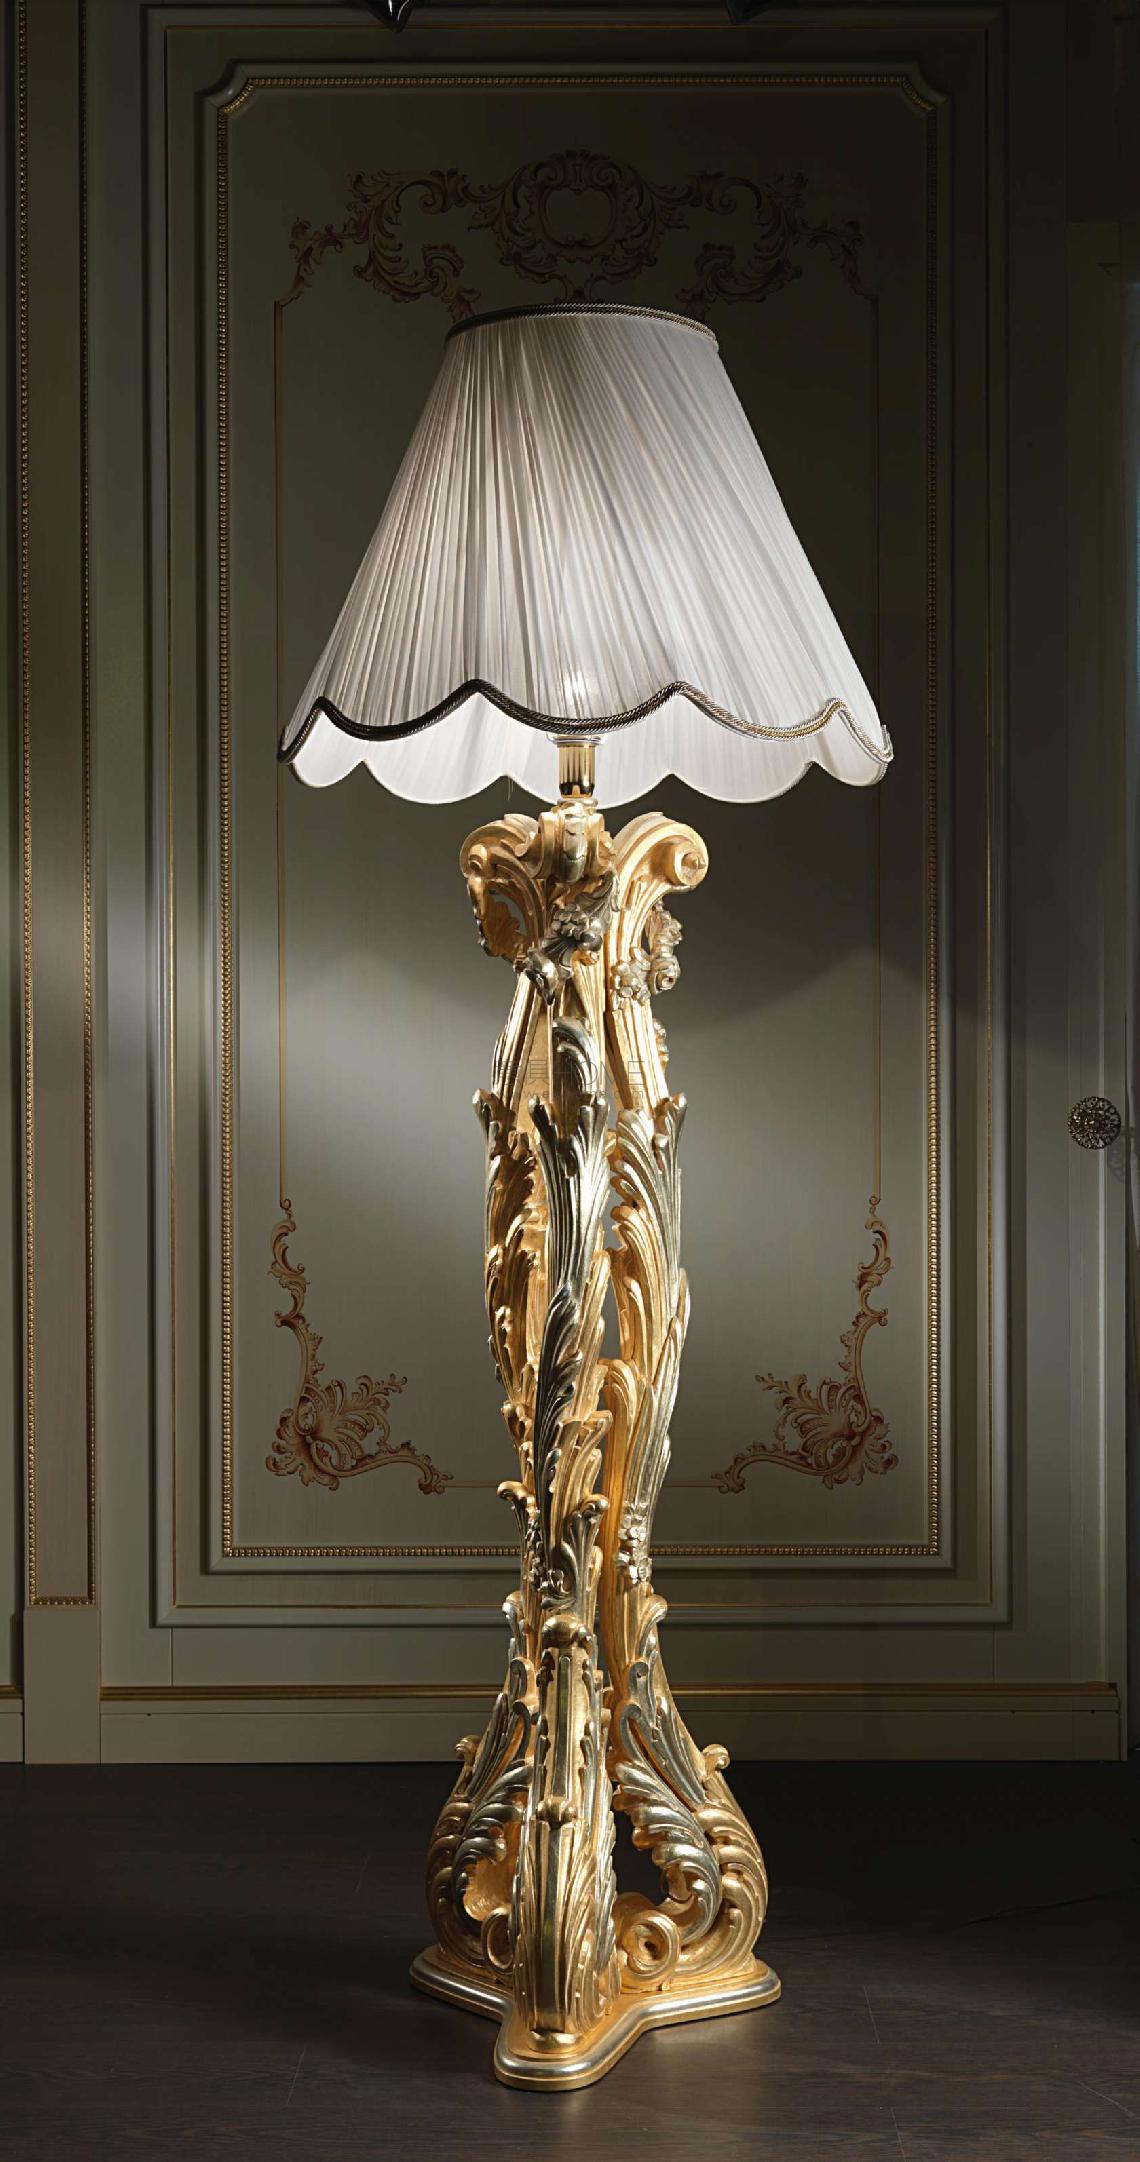 VIMERCATI Classic floor lamp in Baroque style 落地灯1